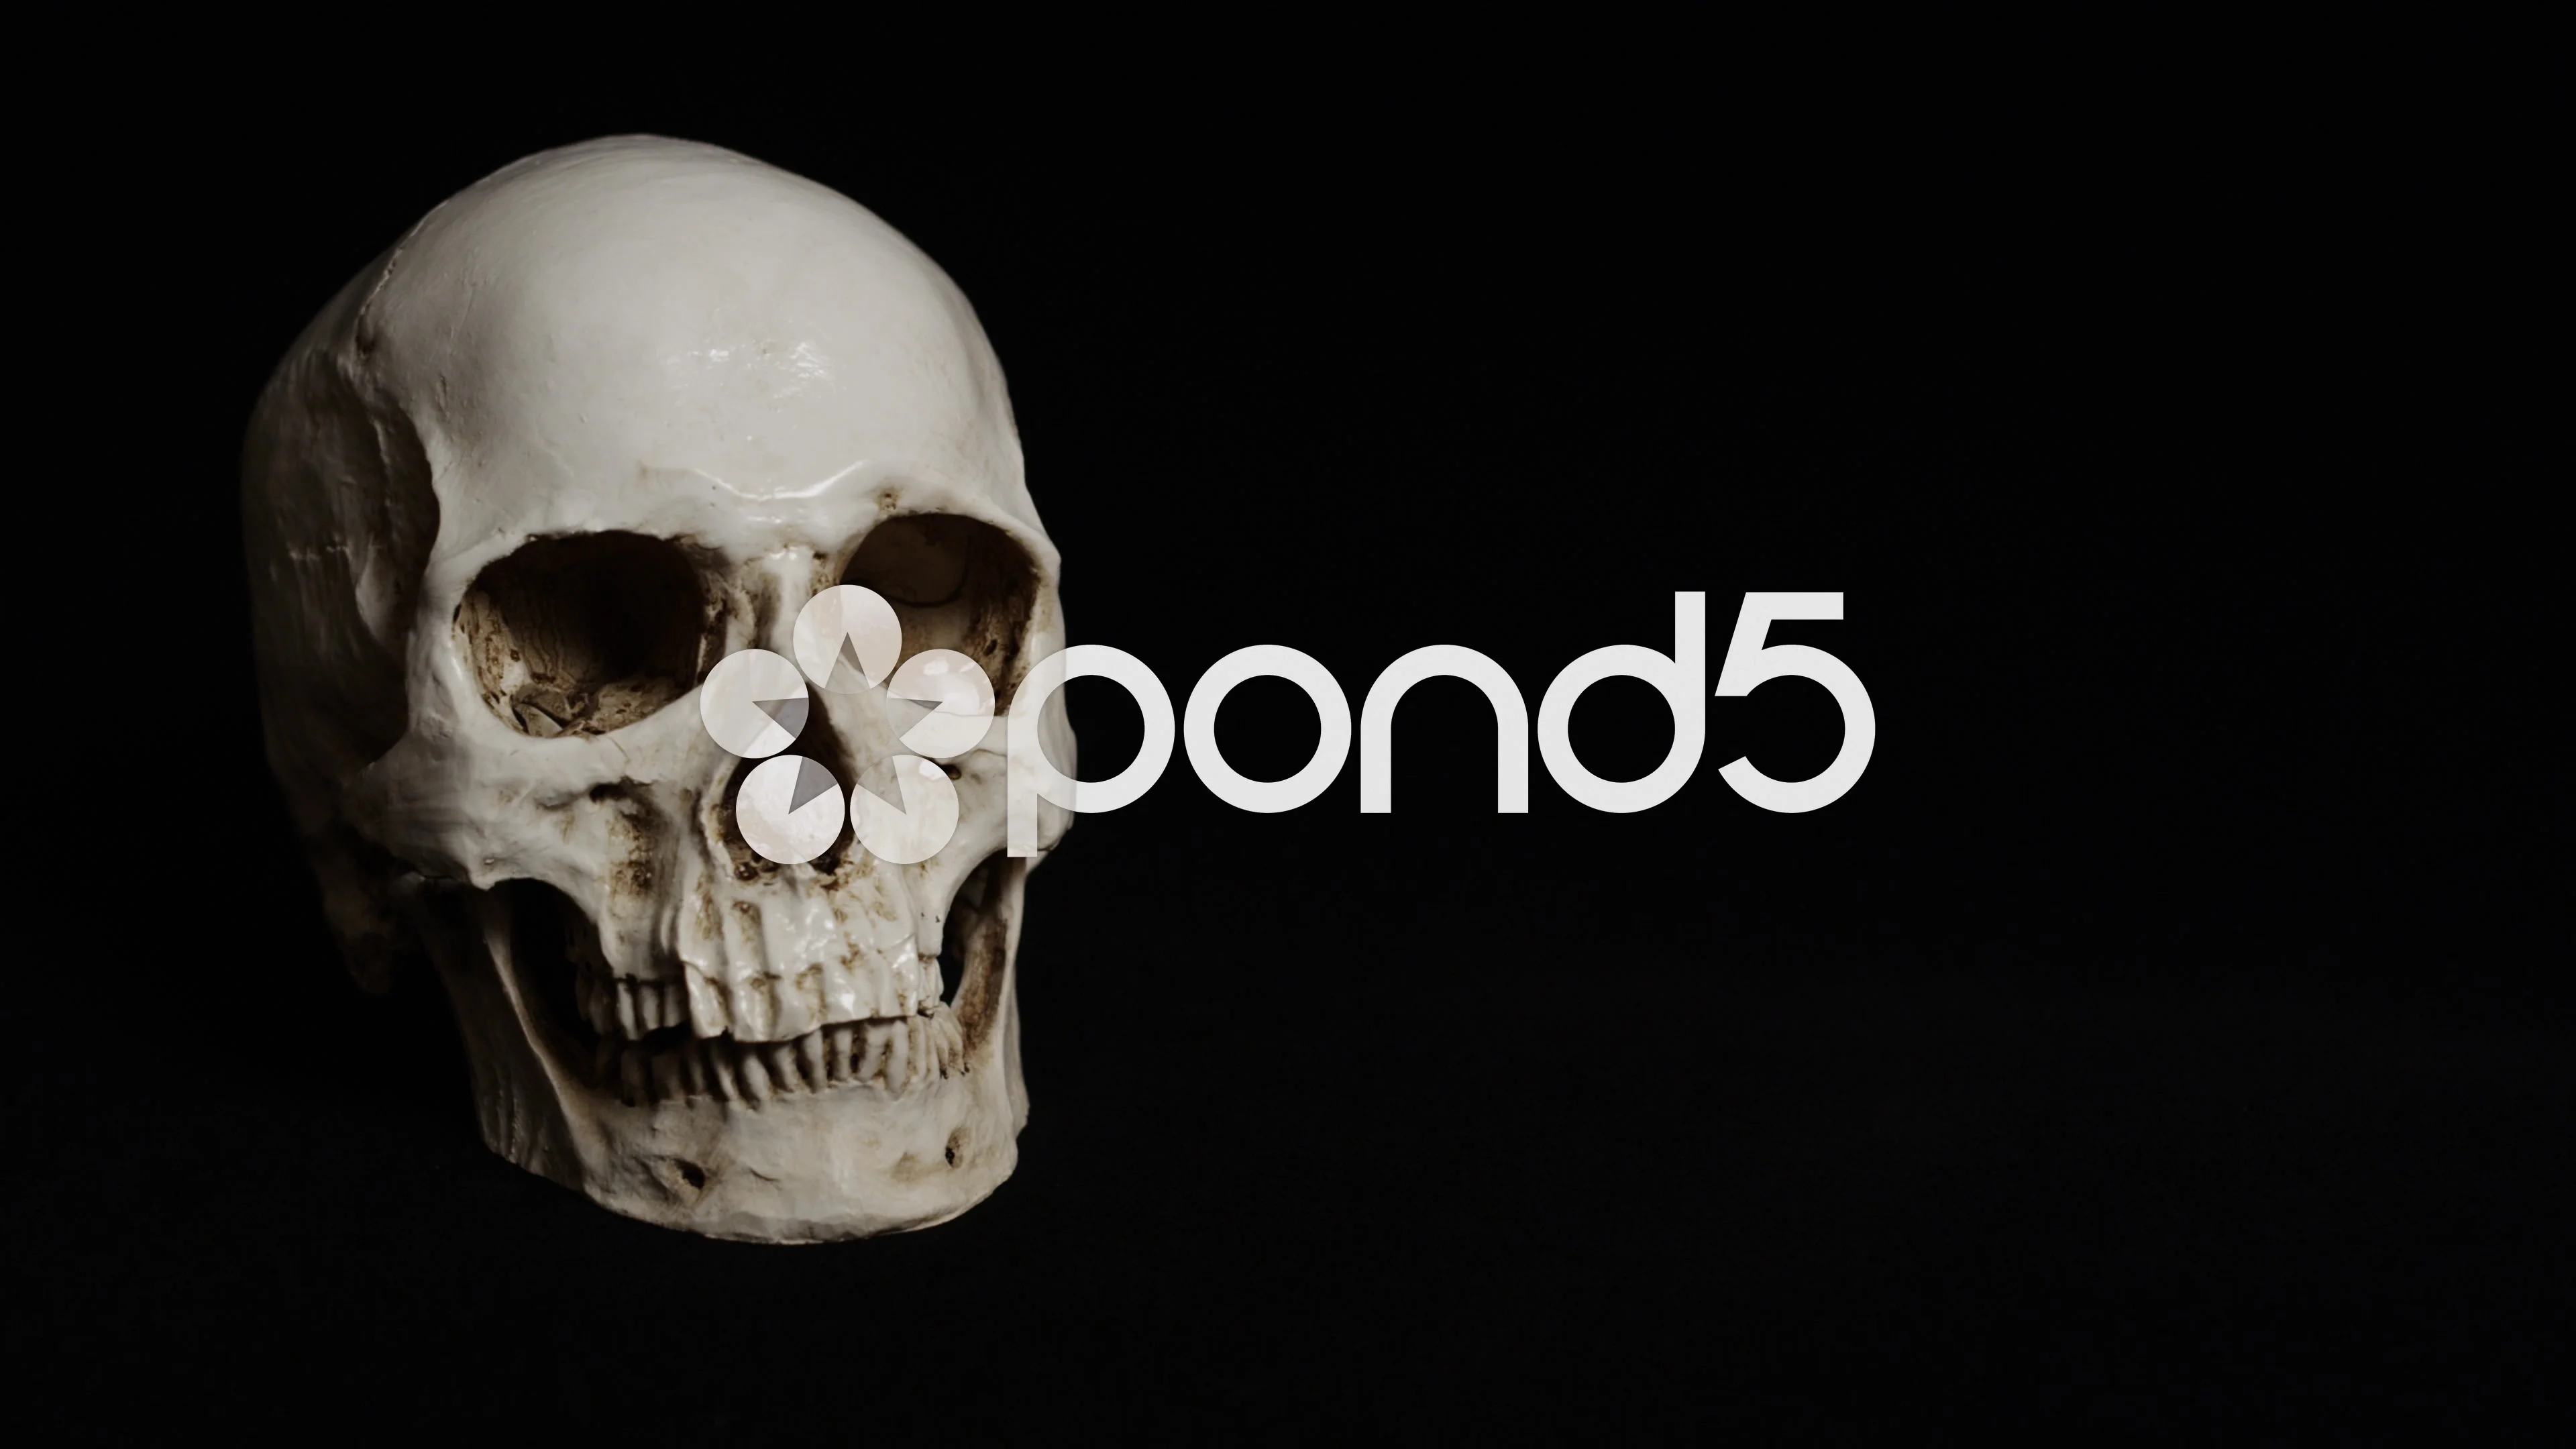 4K Ultra HD - Mysterious Human Skull on ... | Stock Video | Pond5